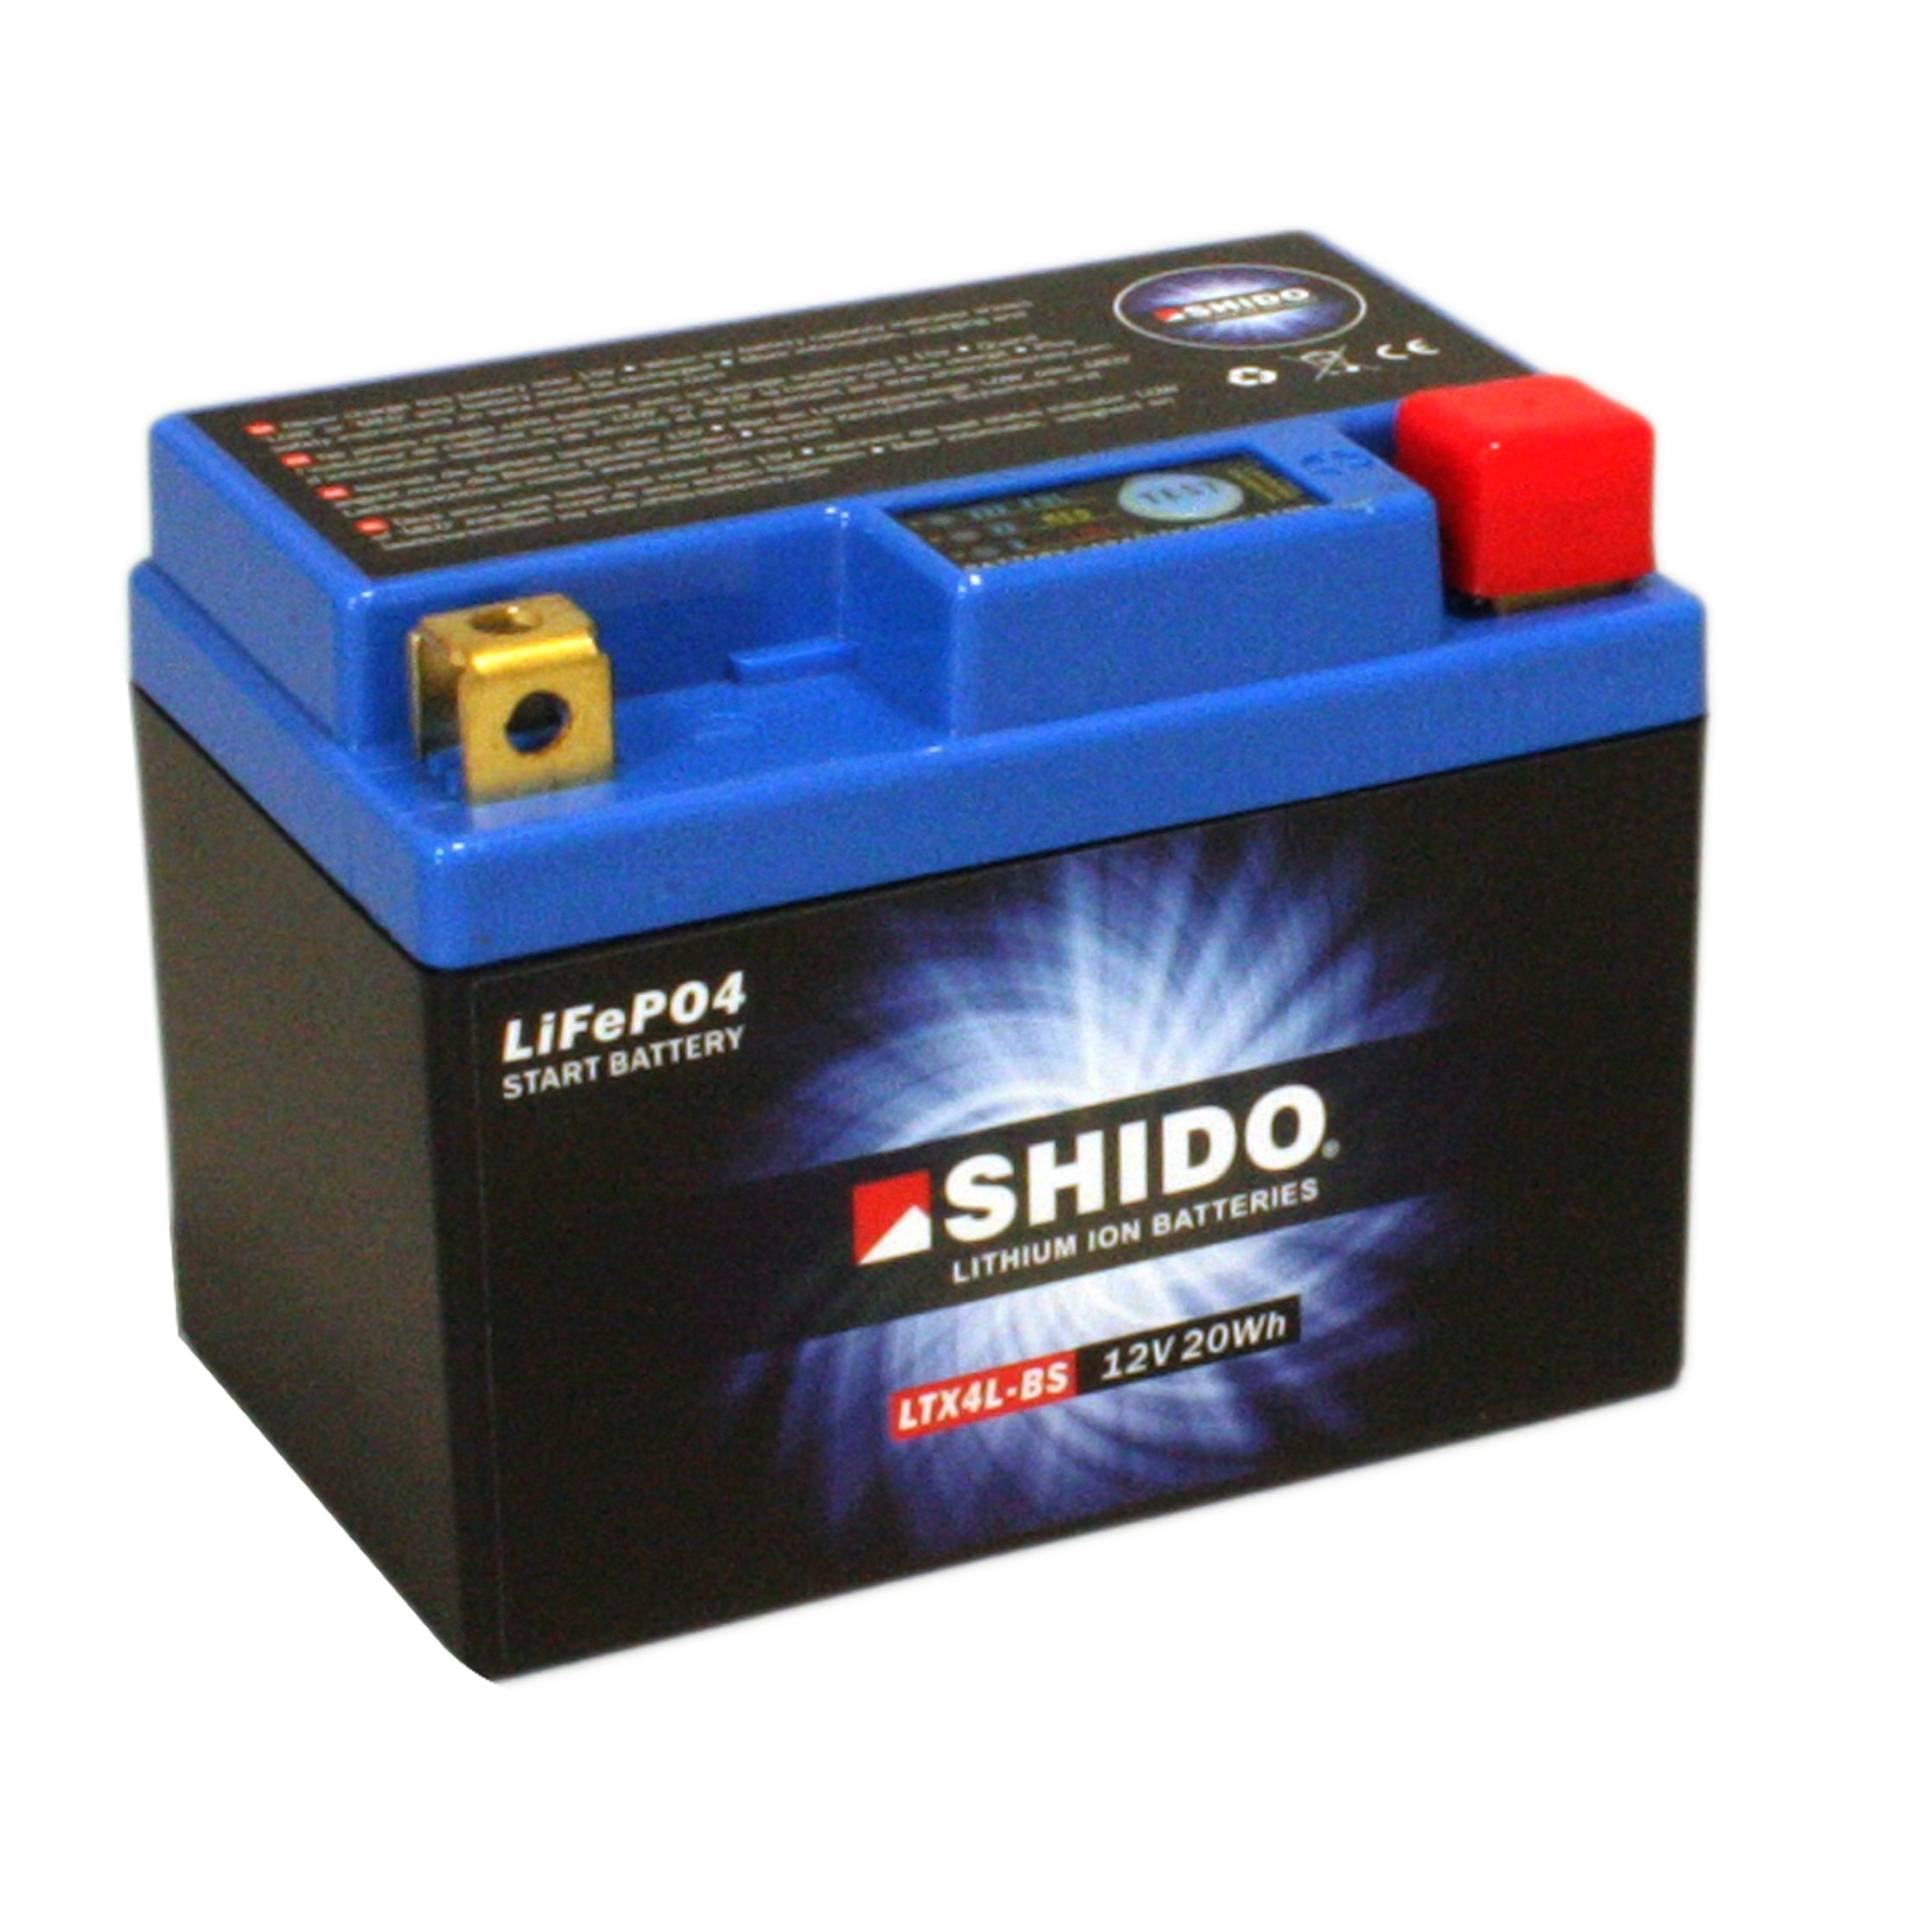 Batterie Shido Lithium LTX4L-BS / YTX4L-BS, 12V/3AH (Maße: 114x71x86) für MBK X-Power 50 Baujahr 2009 von Shido